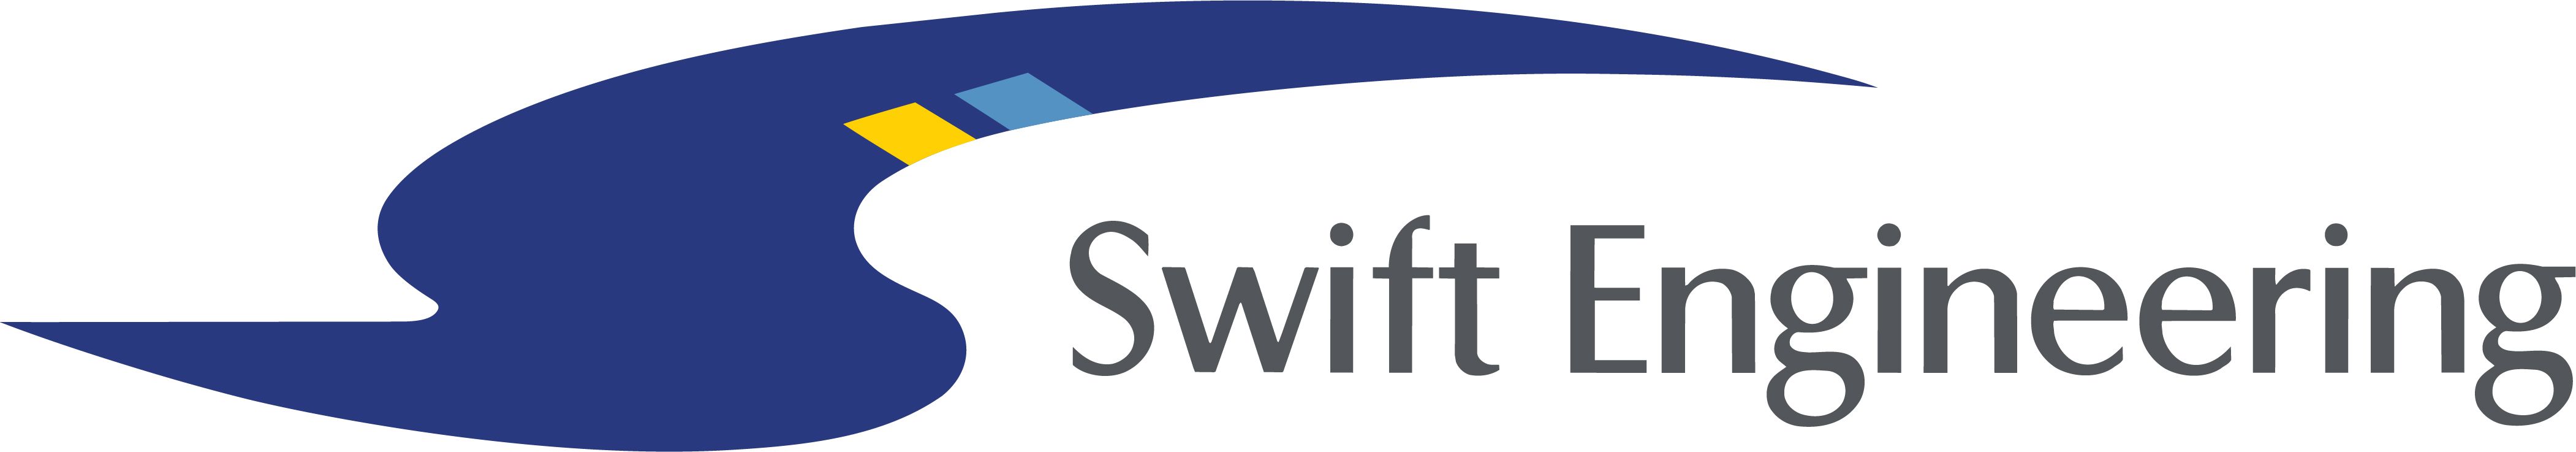 swift-engineering